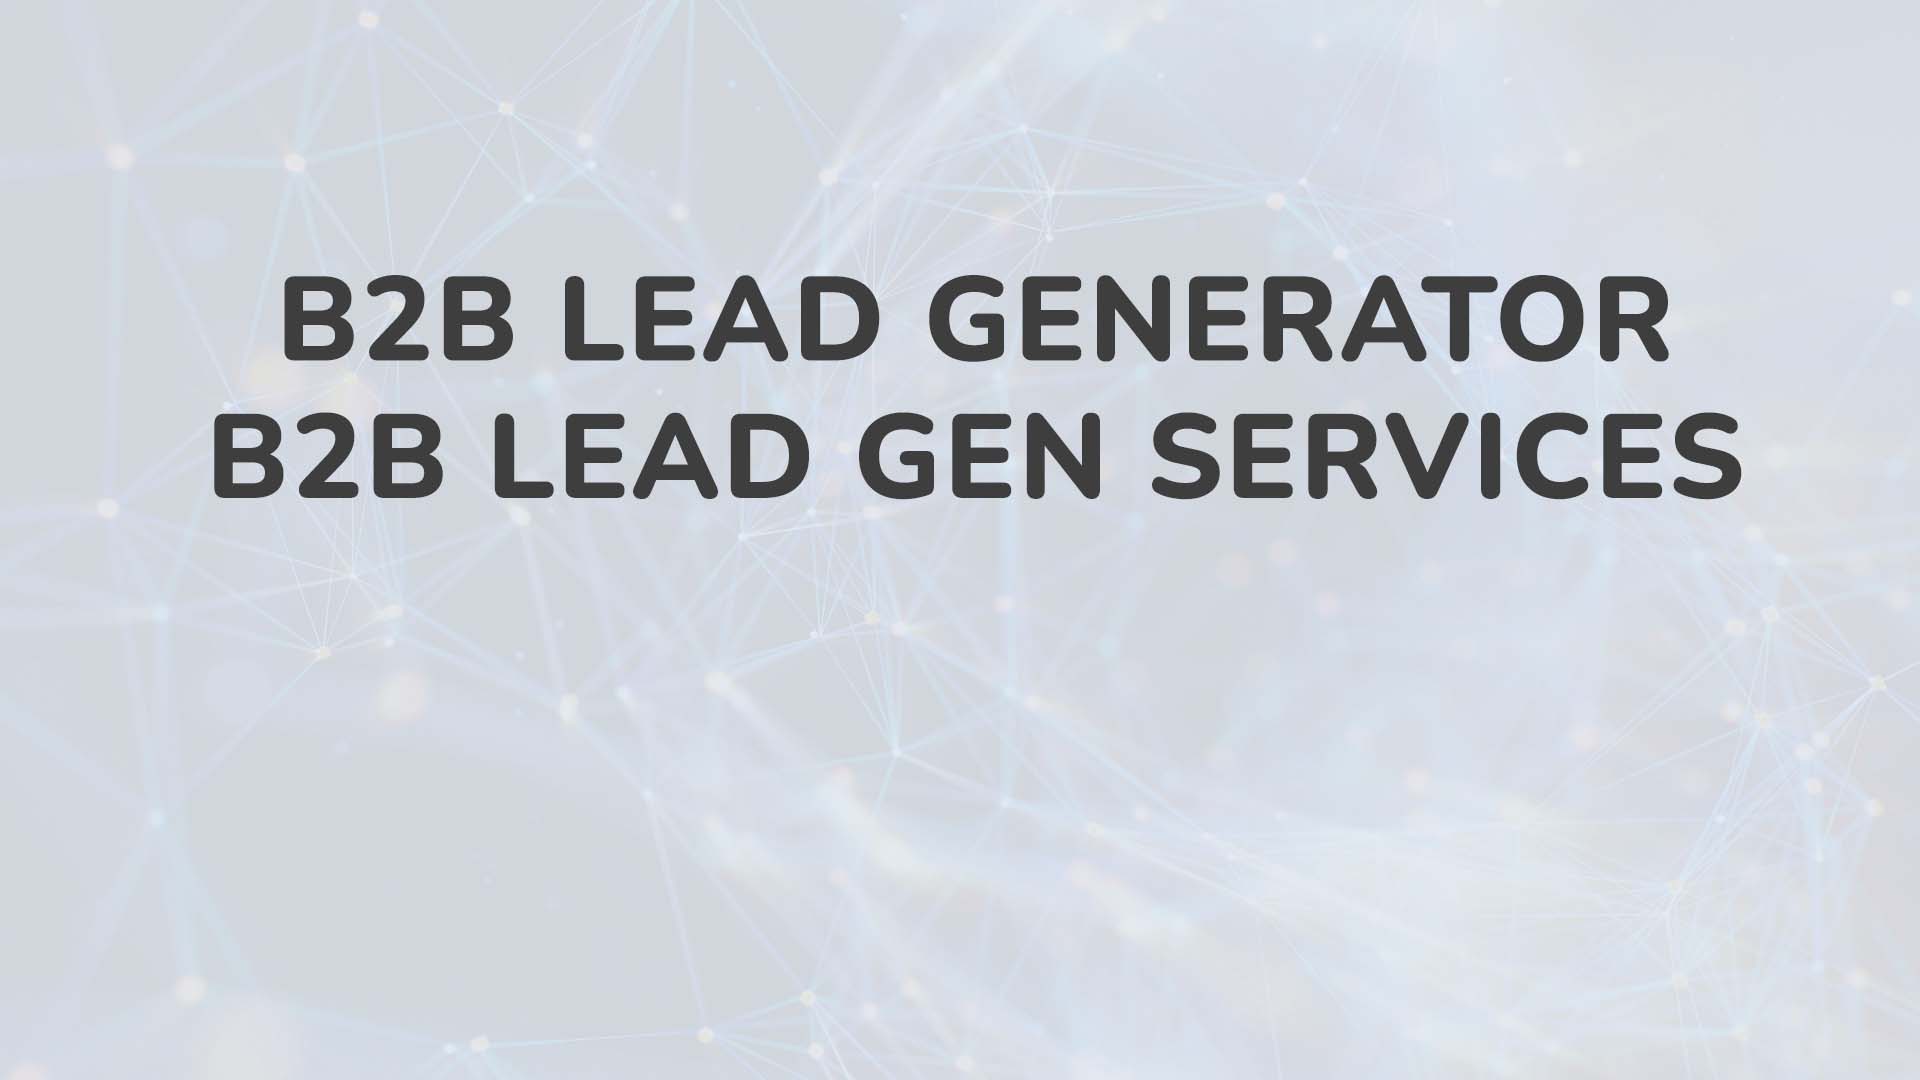 B2b Lead Generator B2b Lead Gen Services